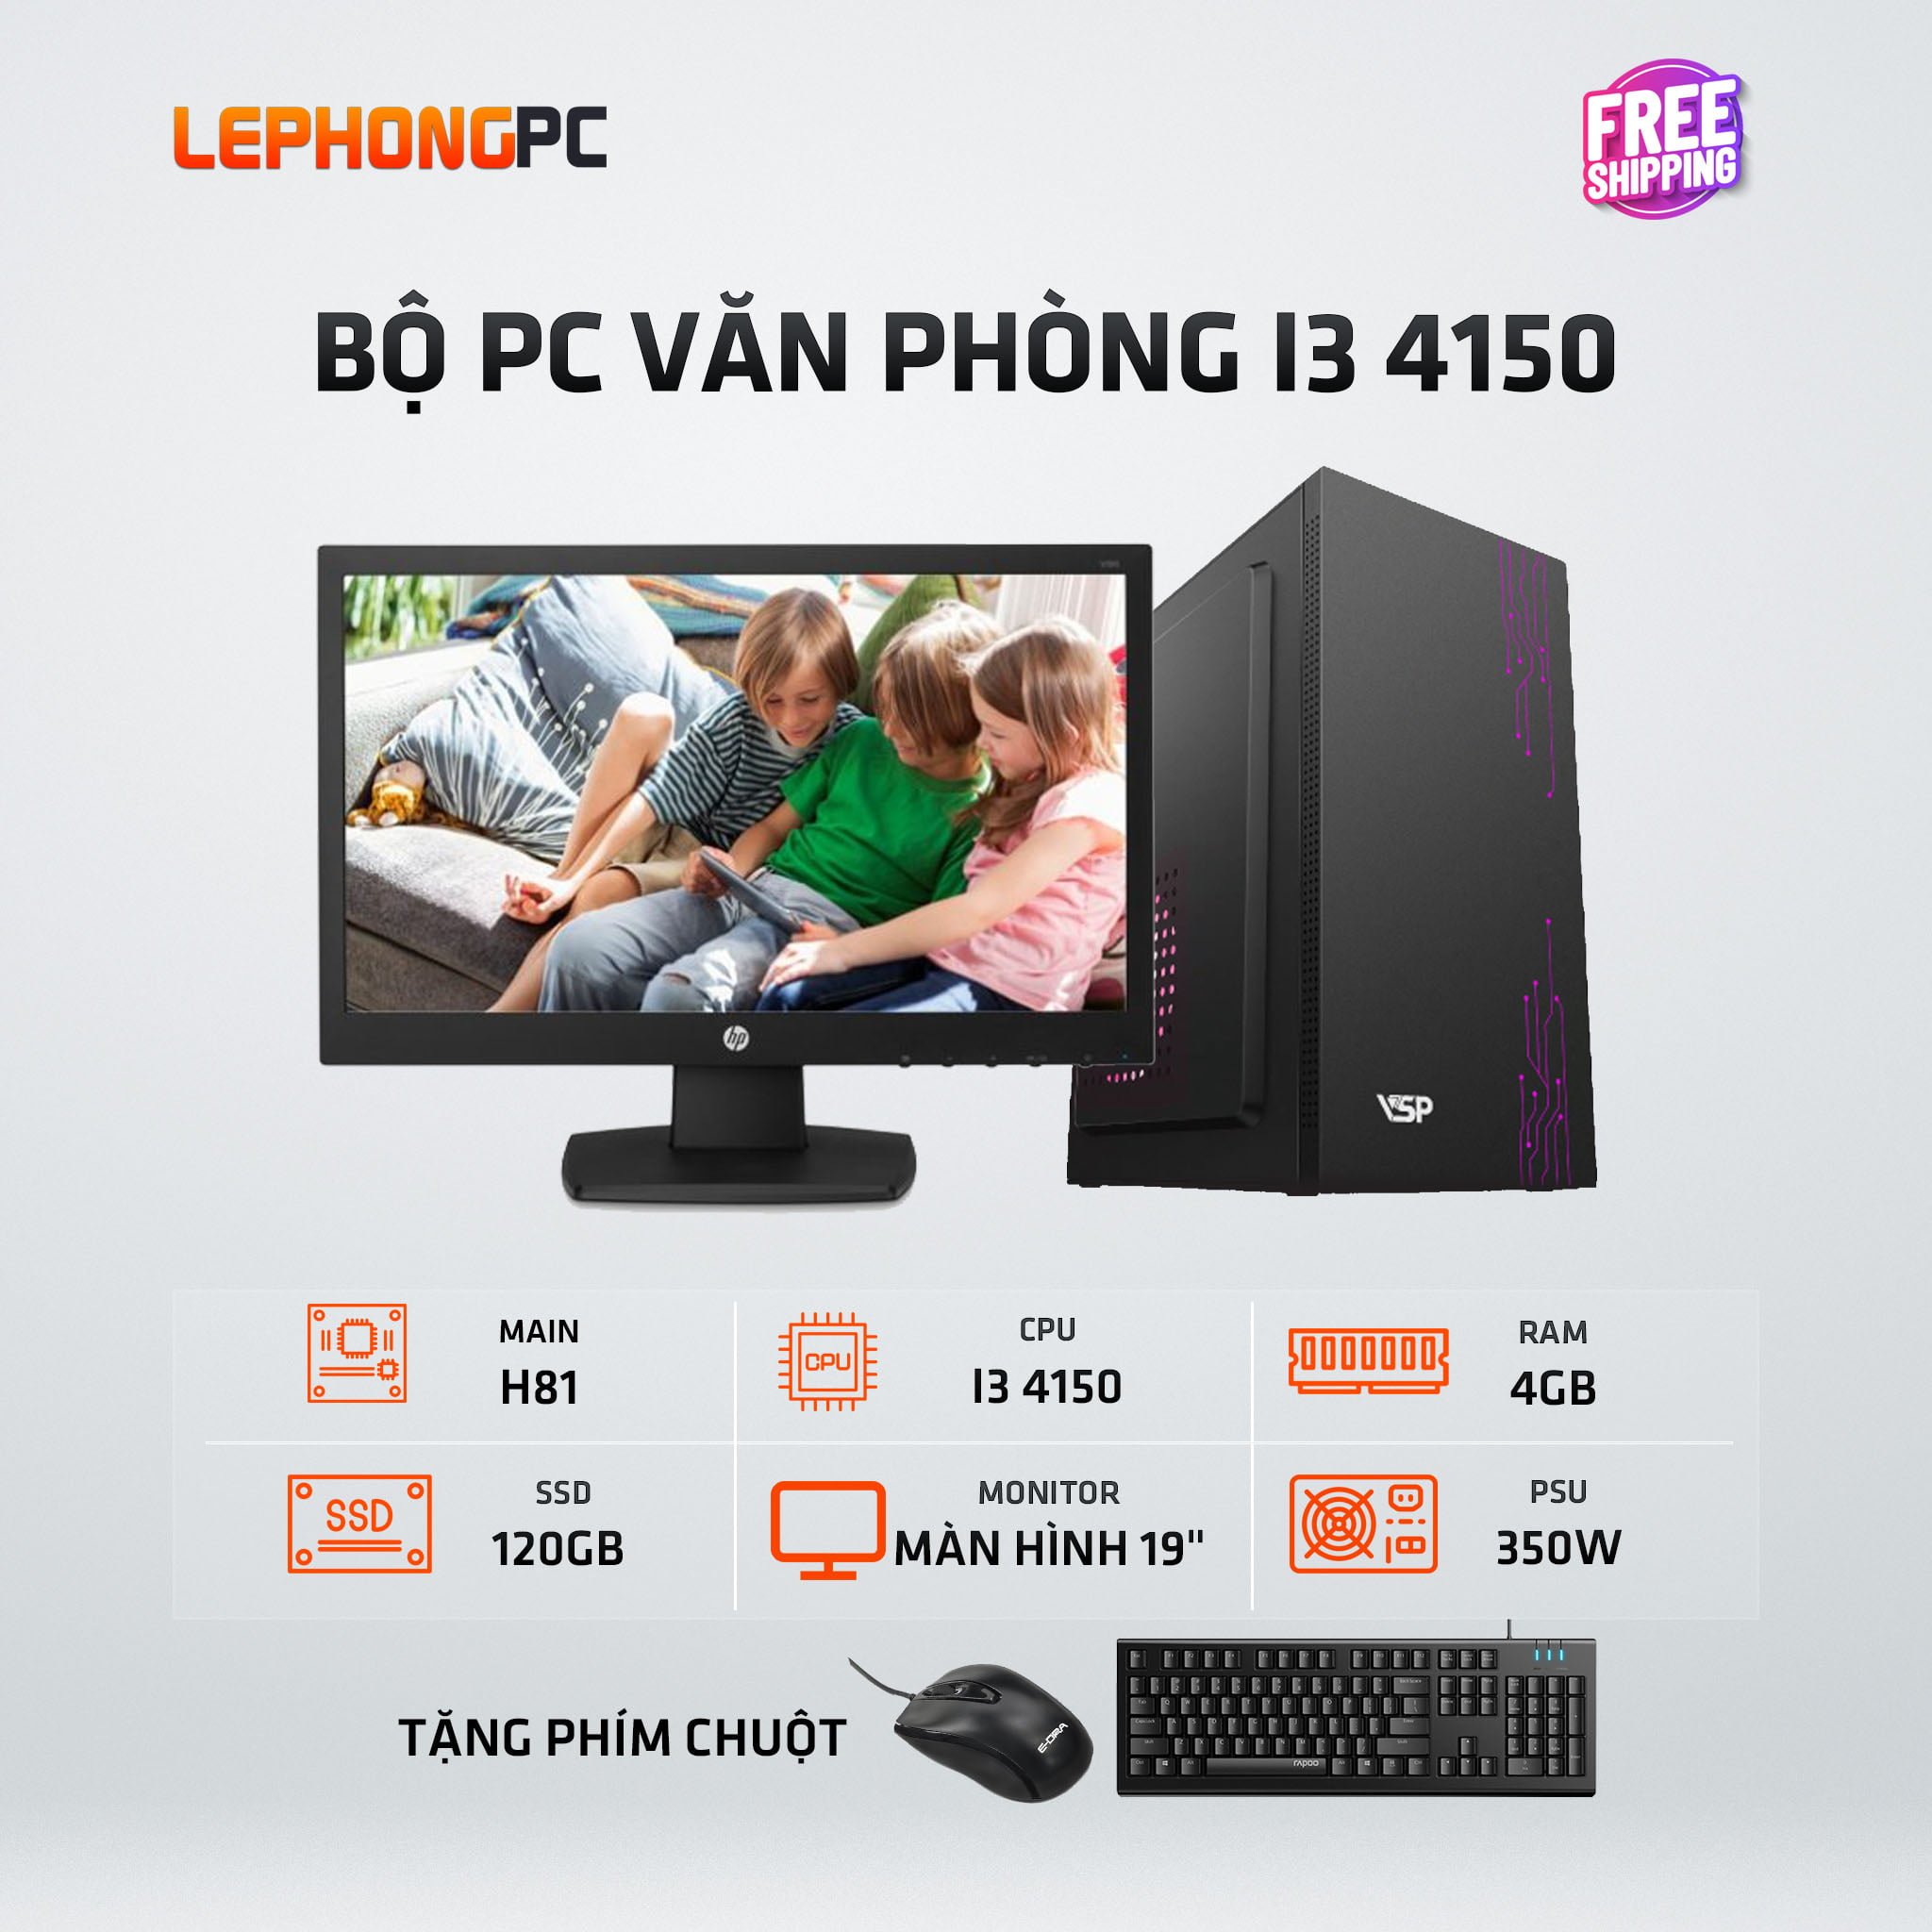 BO PC VAN PHONG I3 4150